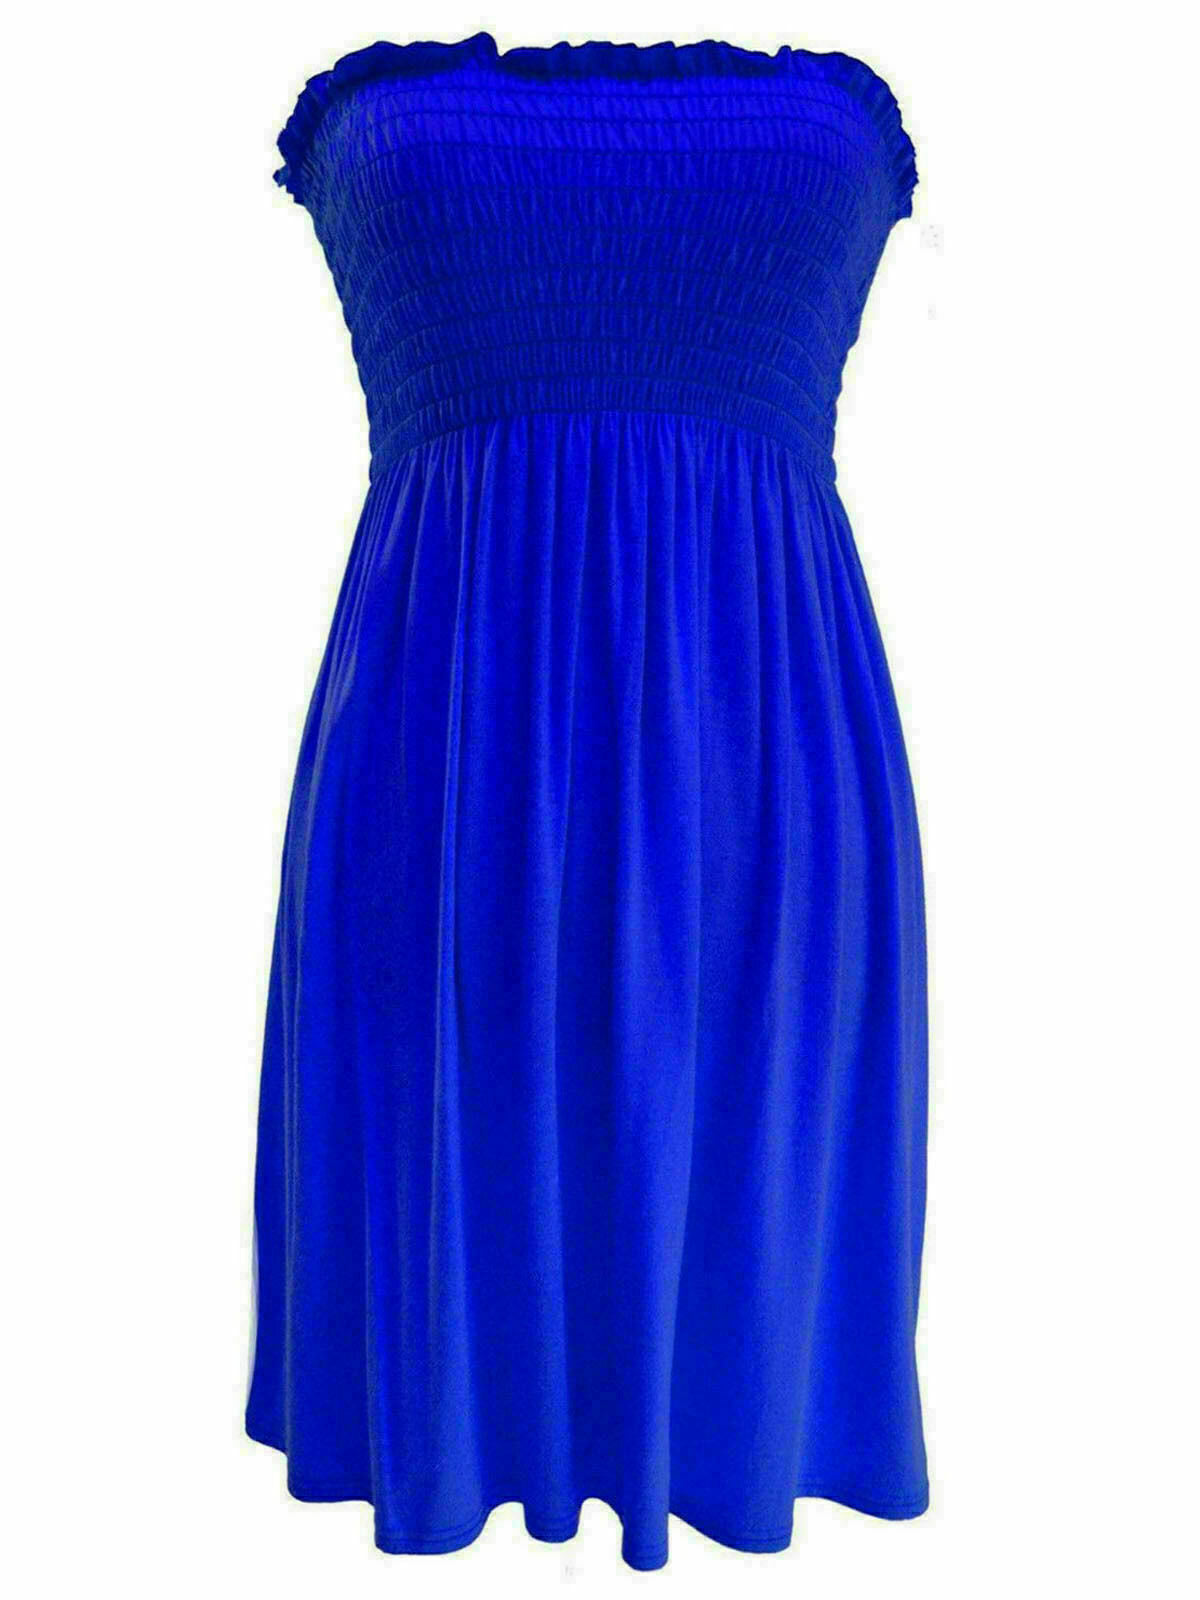 Ladies Plain Royal Blue Boob Tube Short Style Dress.